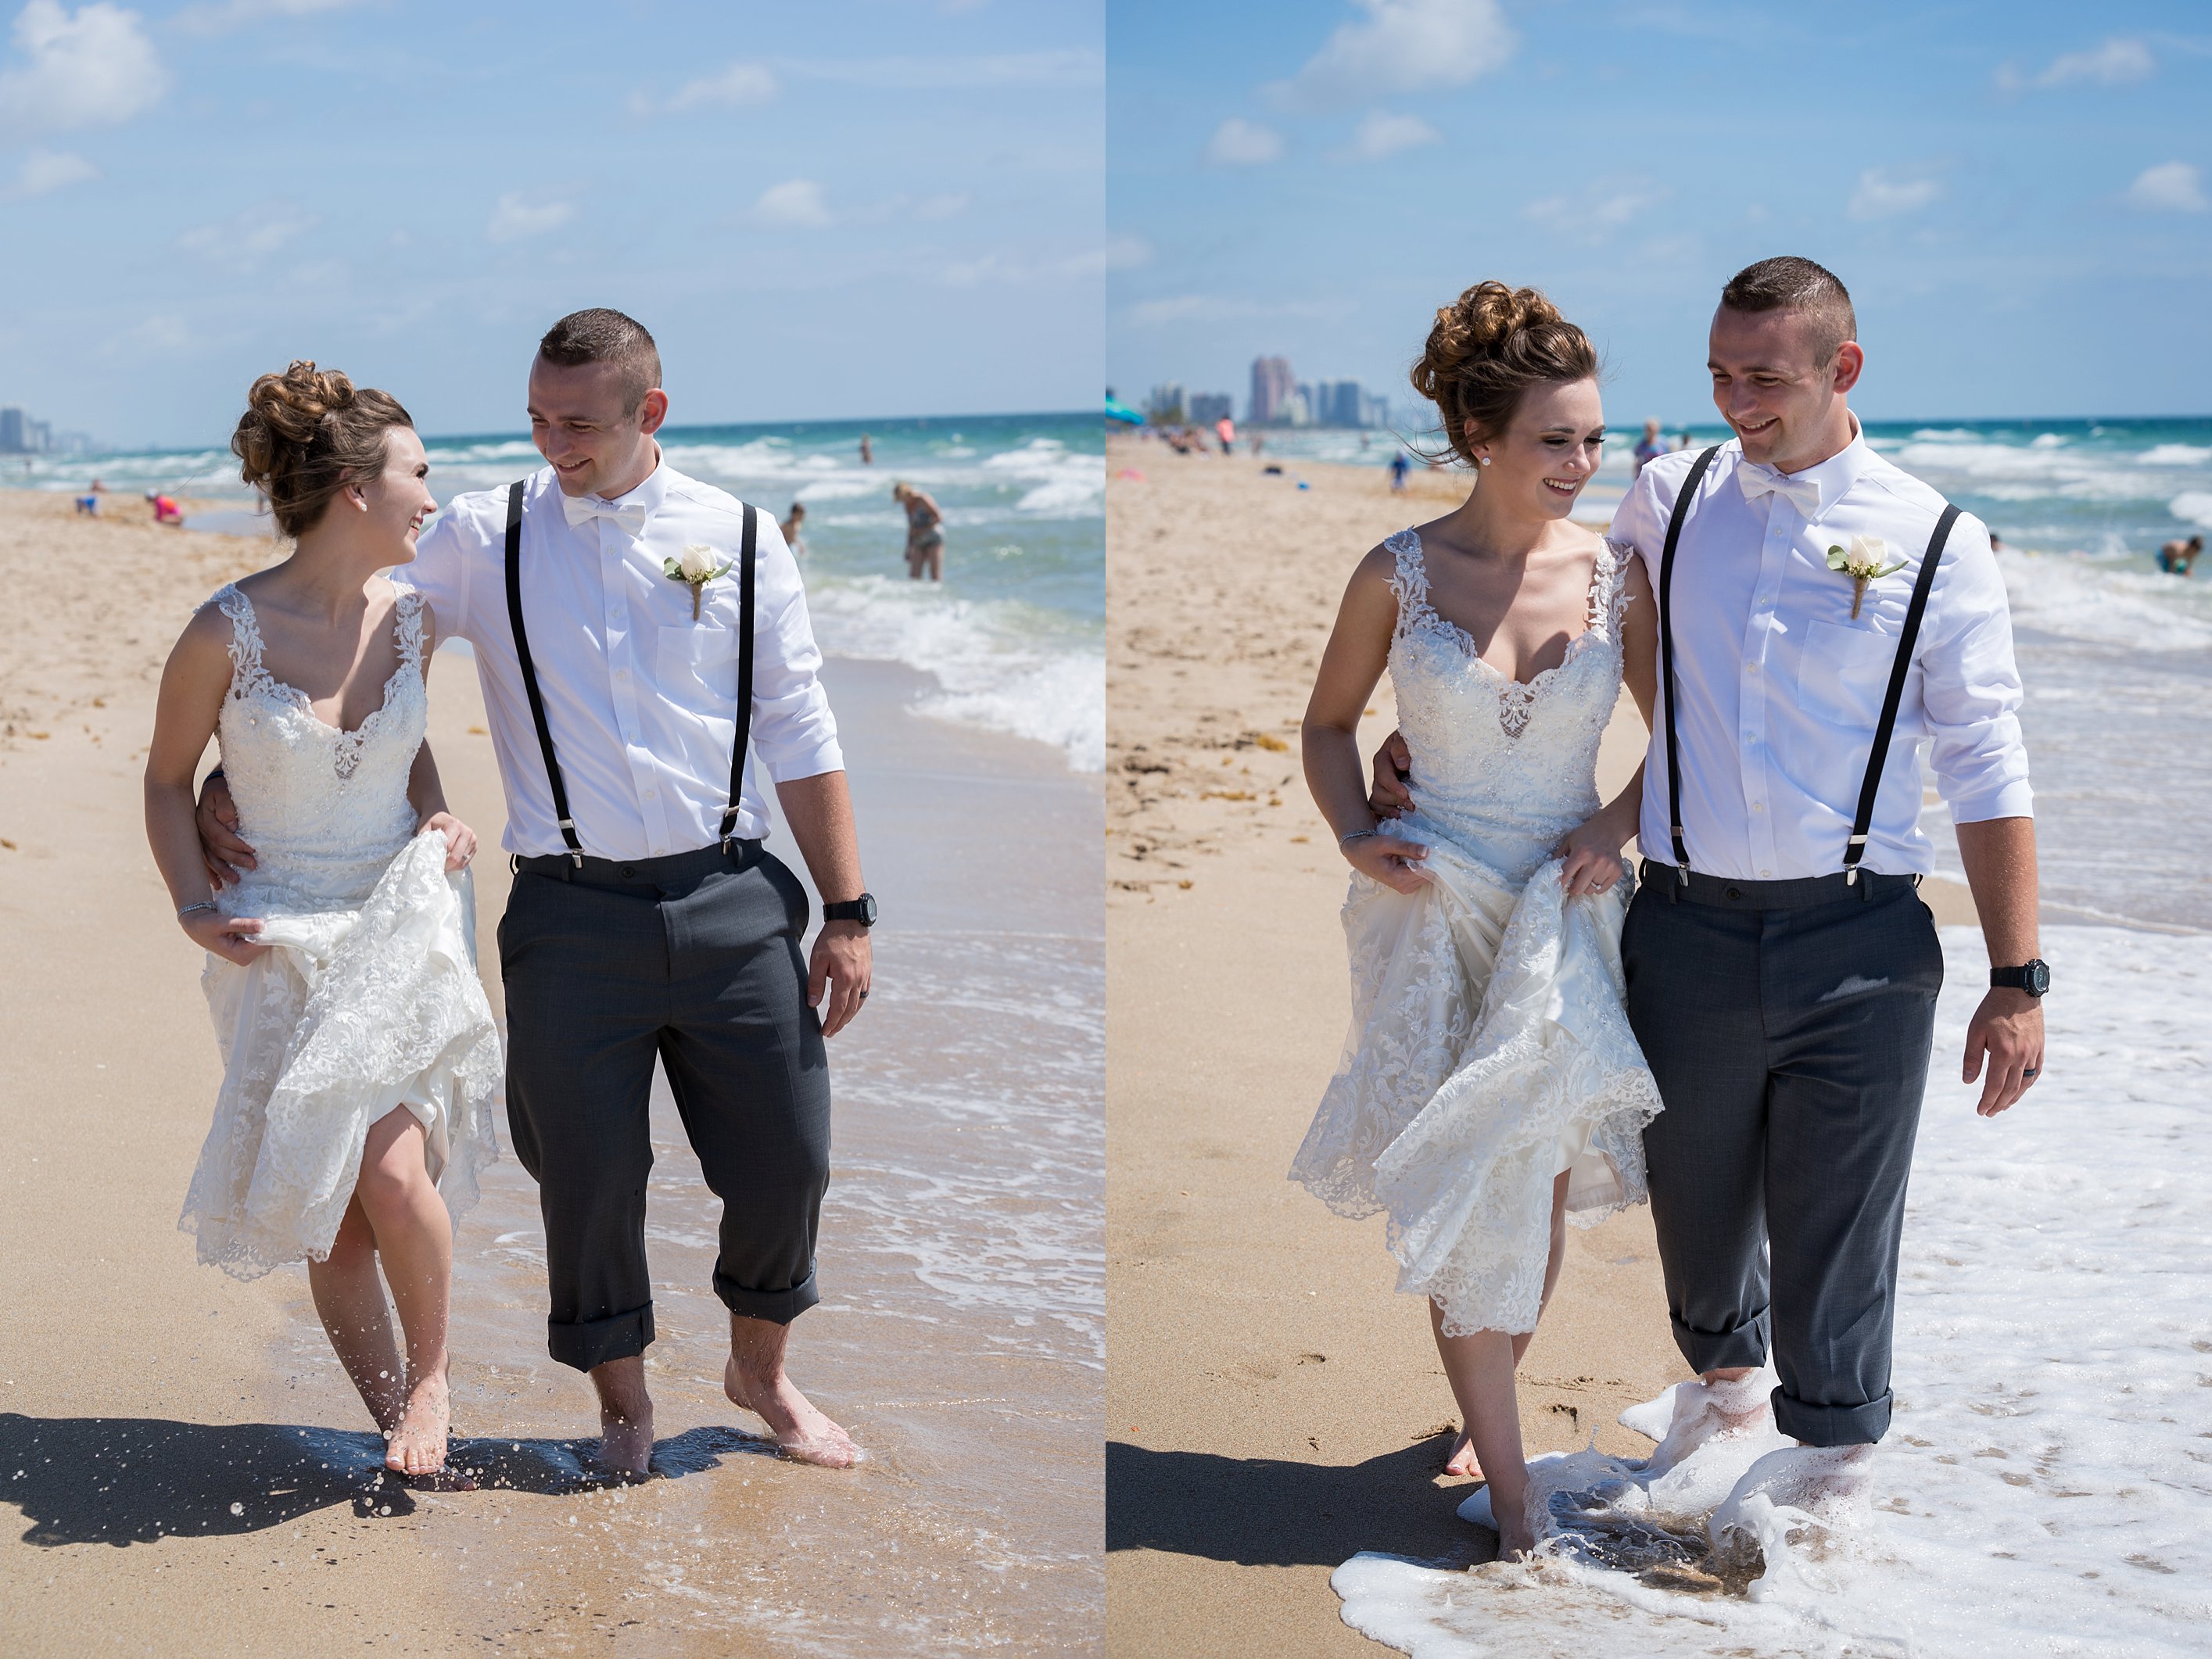 walking in the ocean wedding photo